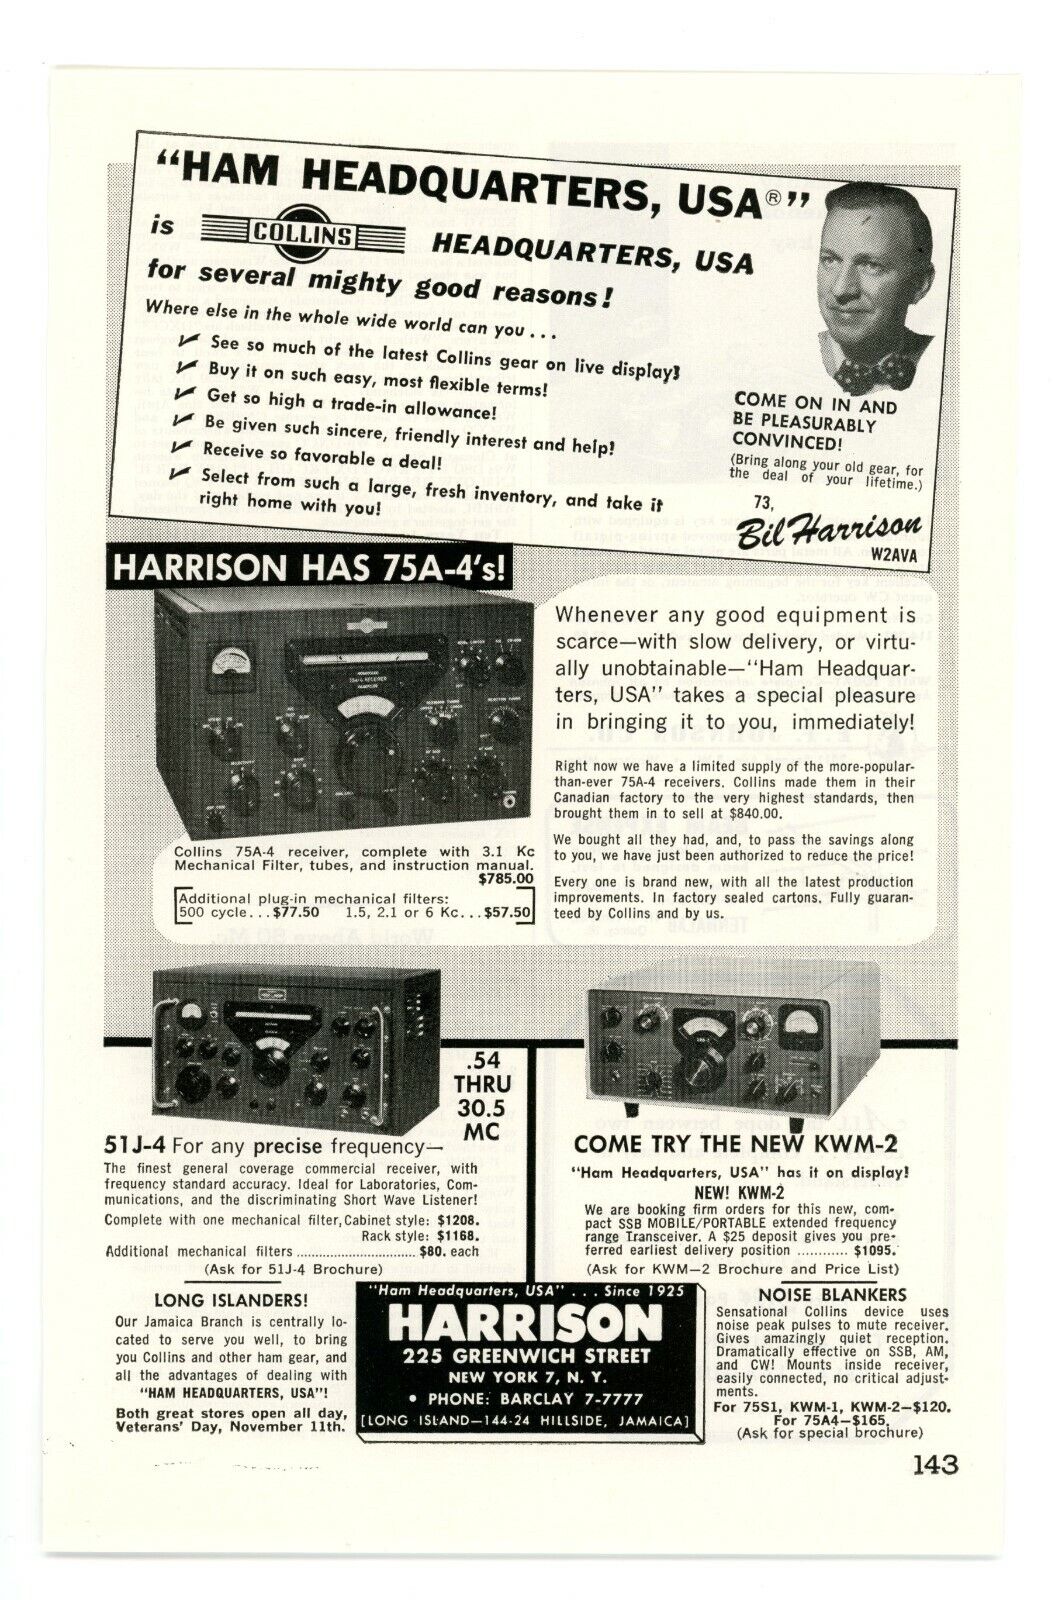 QST Ham Radio Magazine Print Ad COLLINS 75A-4 Receiver from HARRISON (11/59)